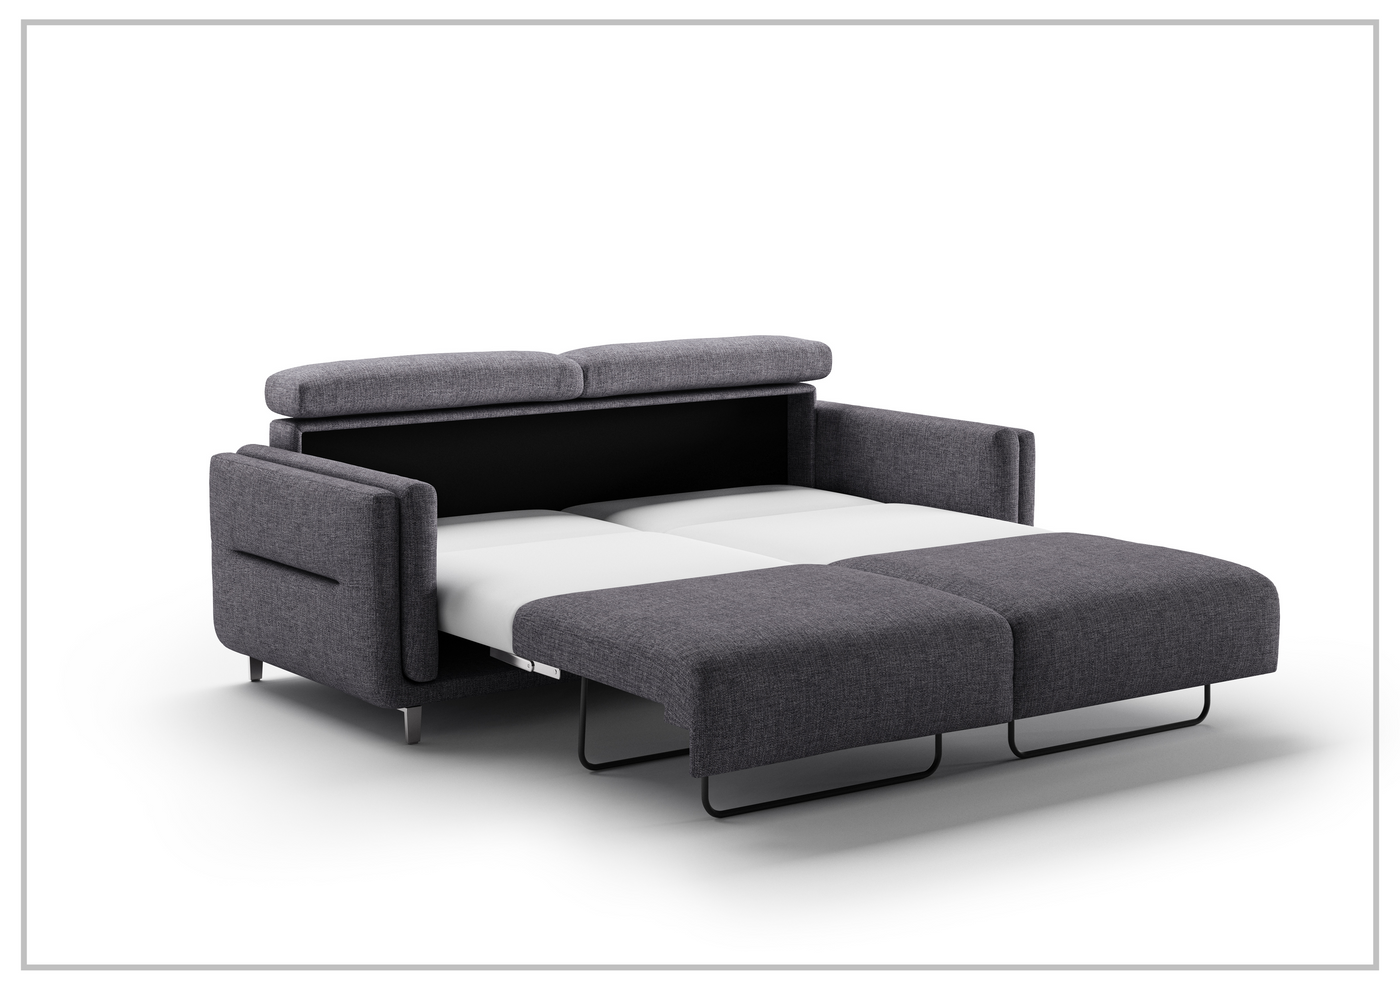 Paris Fabric Sleeper Sofa with Ratchet Adjustable Headrests